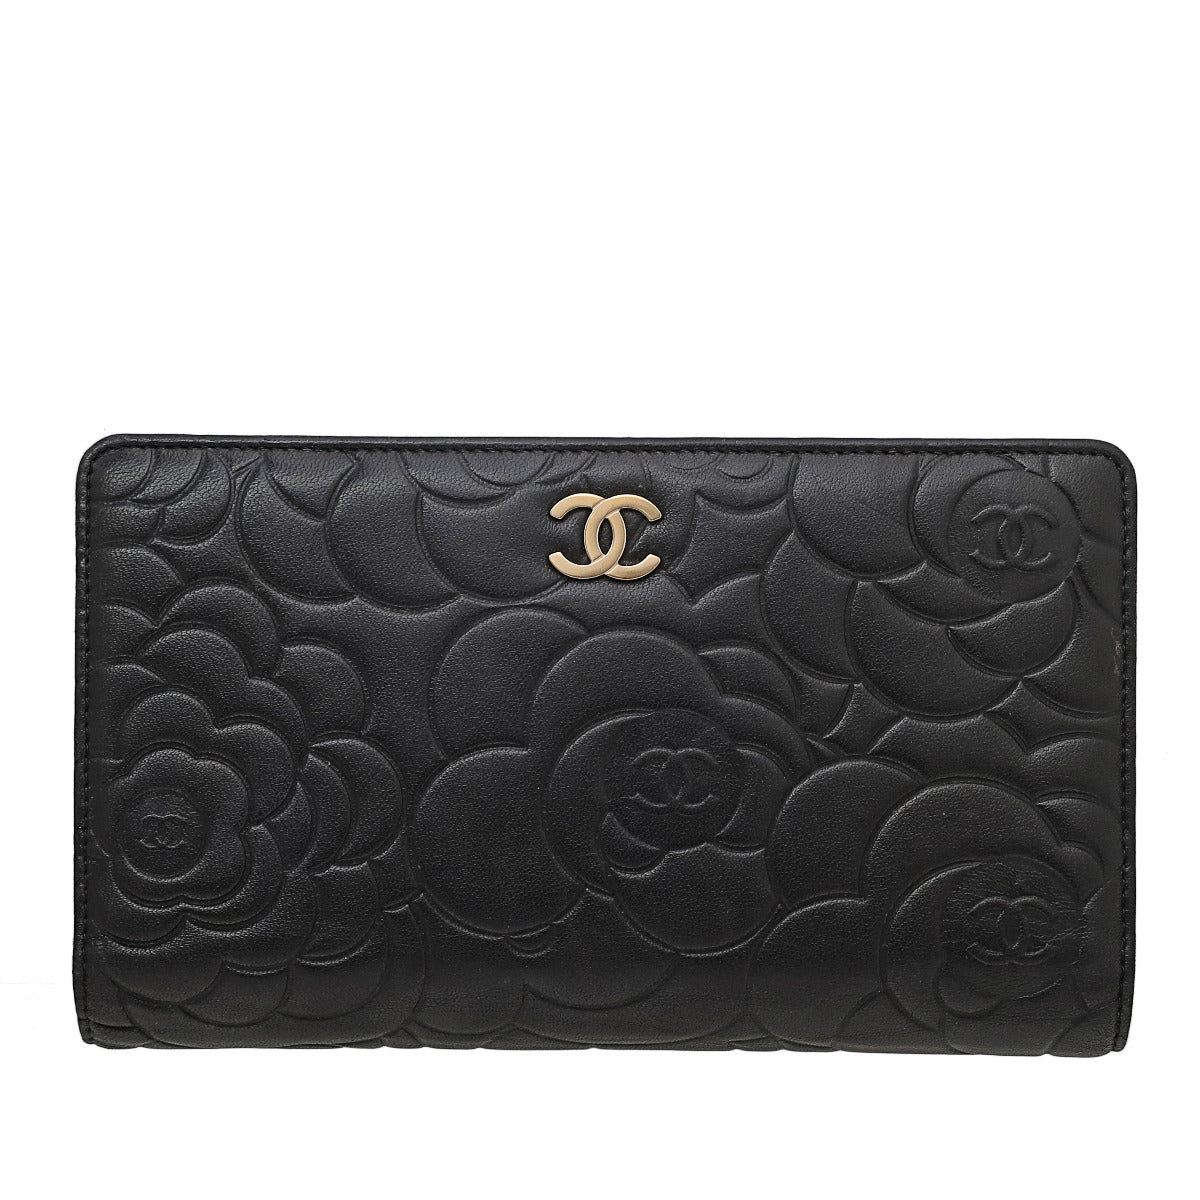 The Closet - Chanel Bicolor Camellia Embossed L Yen Wallet | The Closet